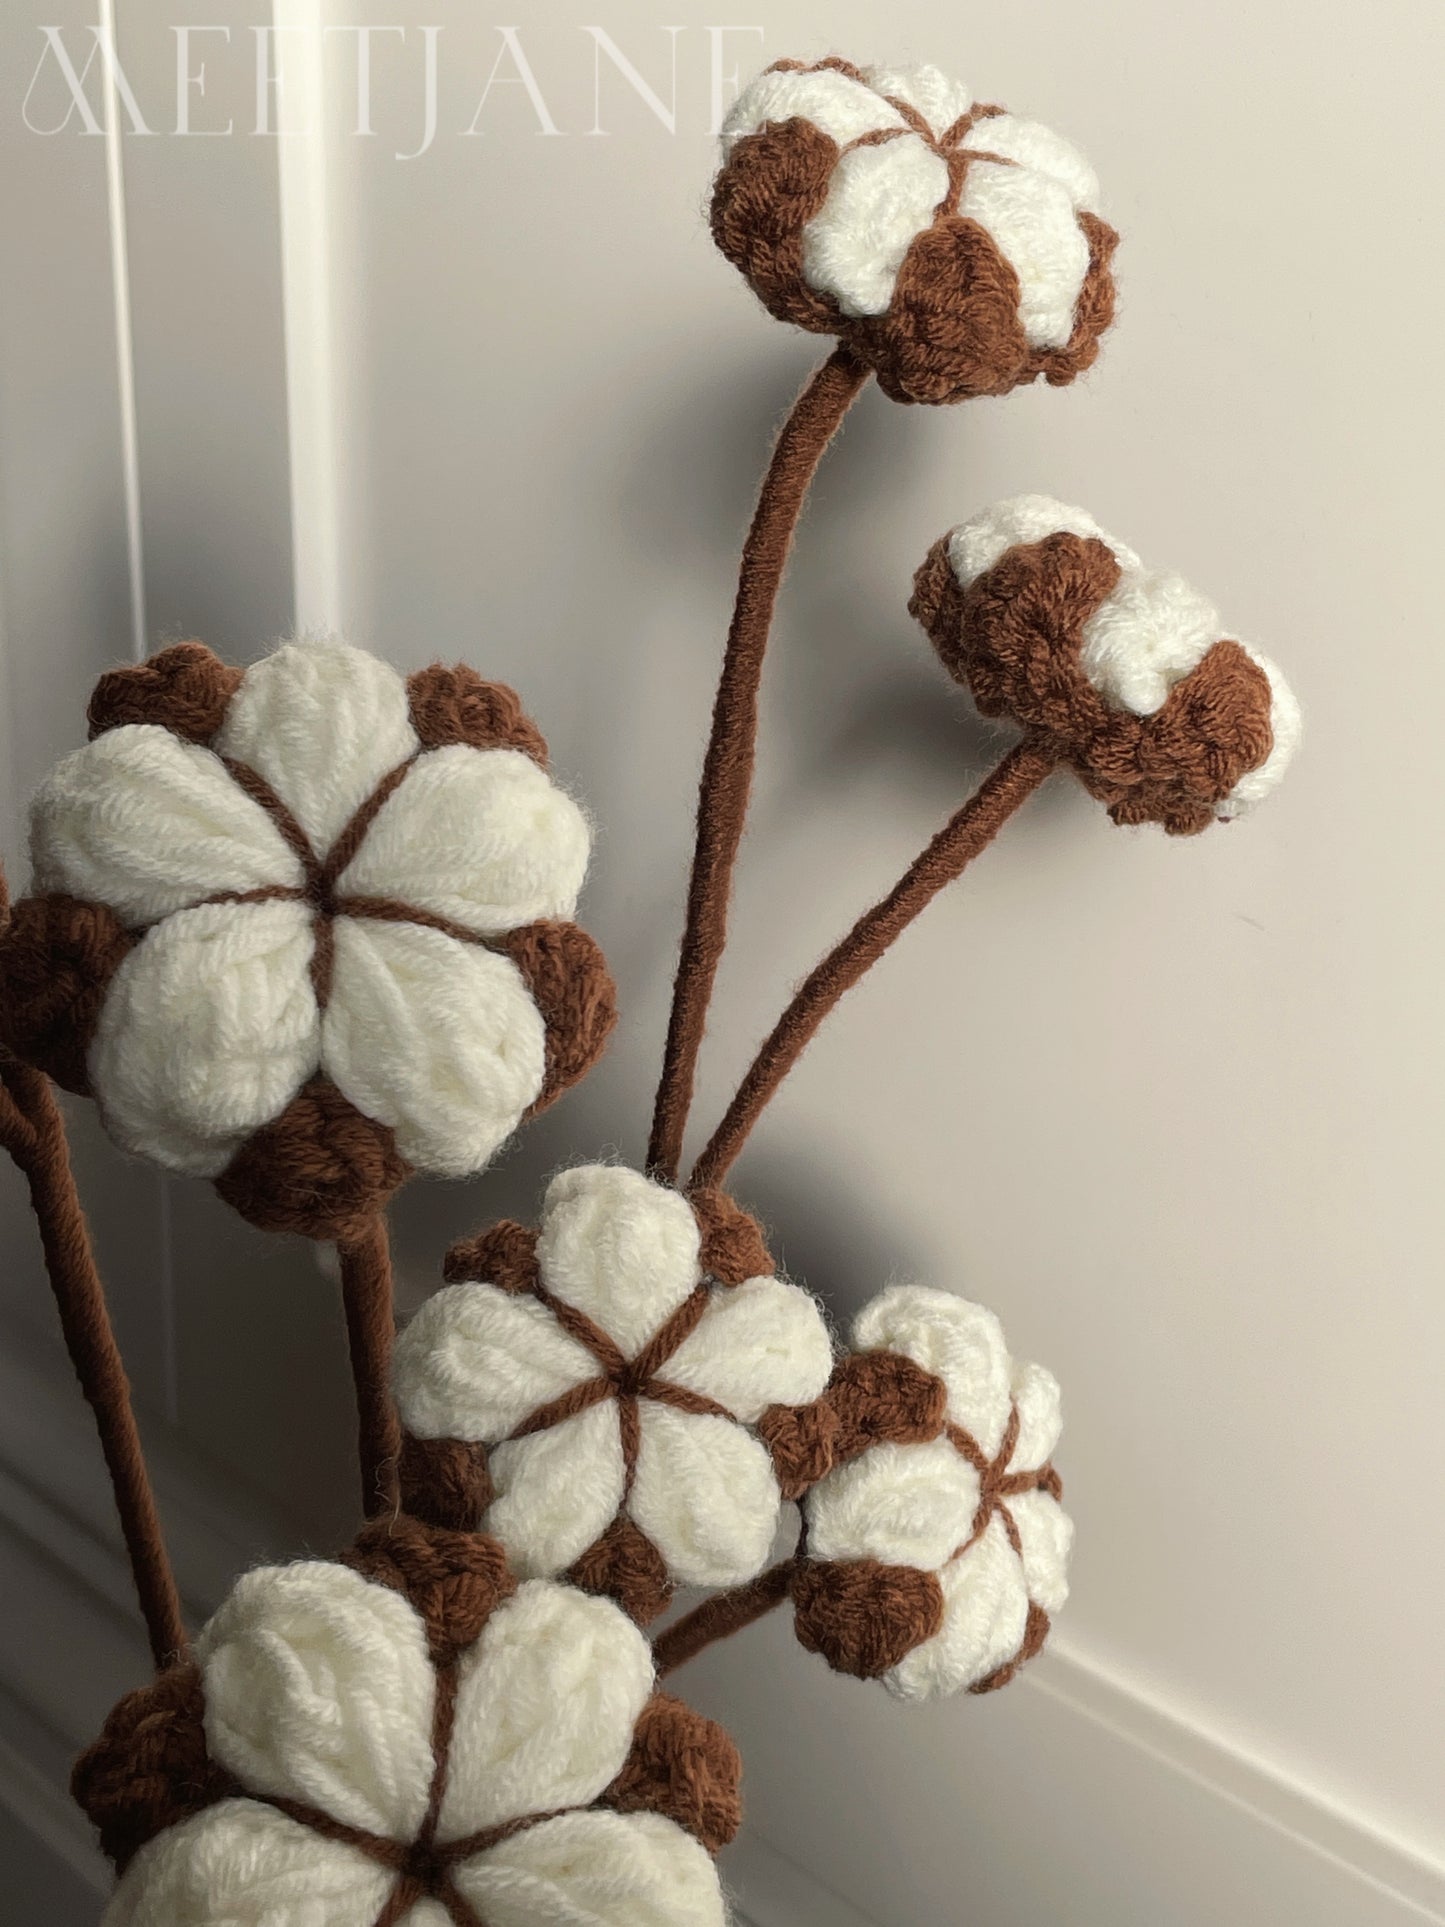 Meetjane bouquet| Melbourne handmade |Cotton